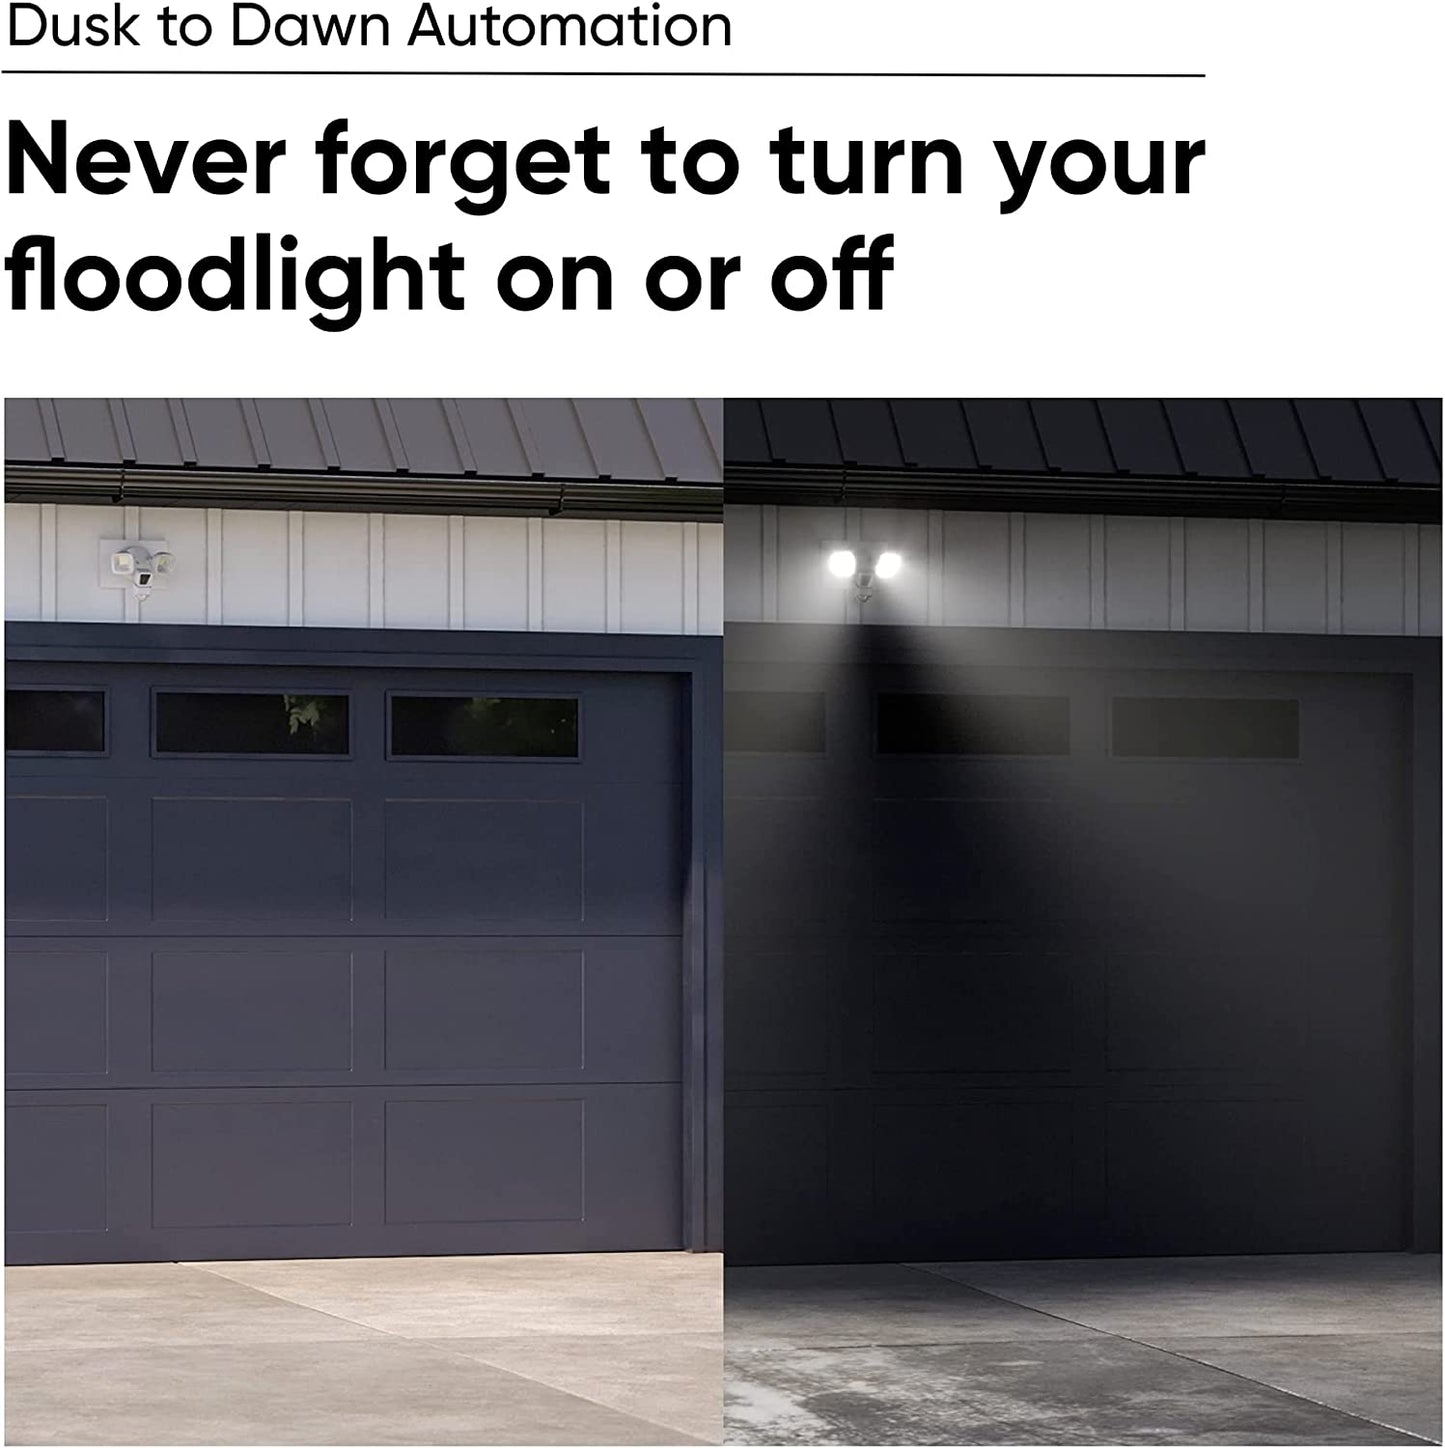 Wyze Cam Floodlight